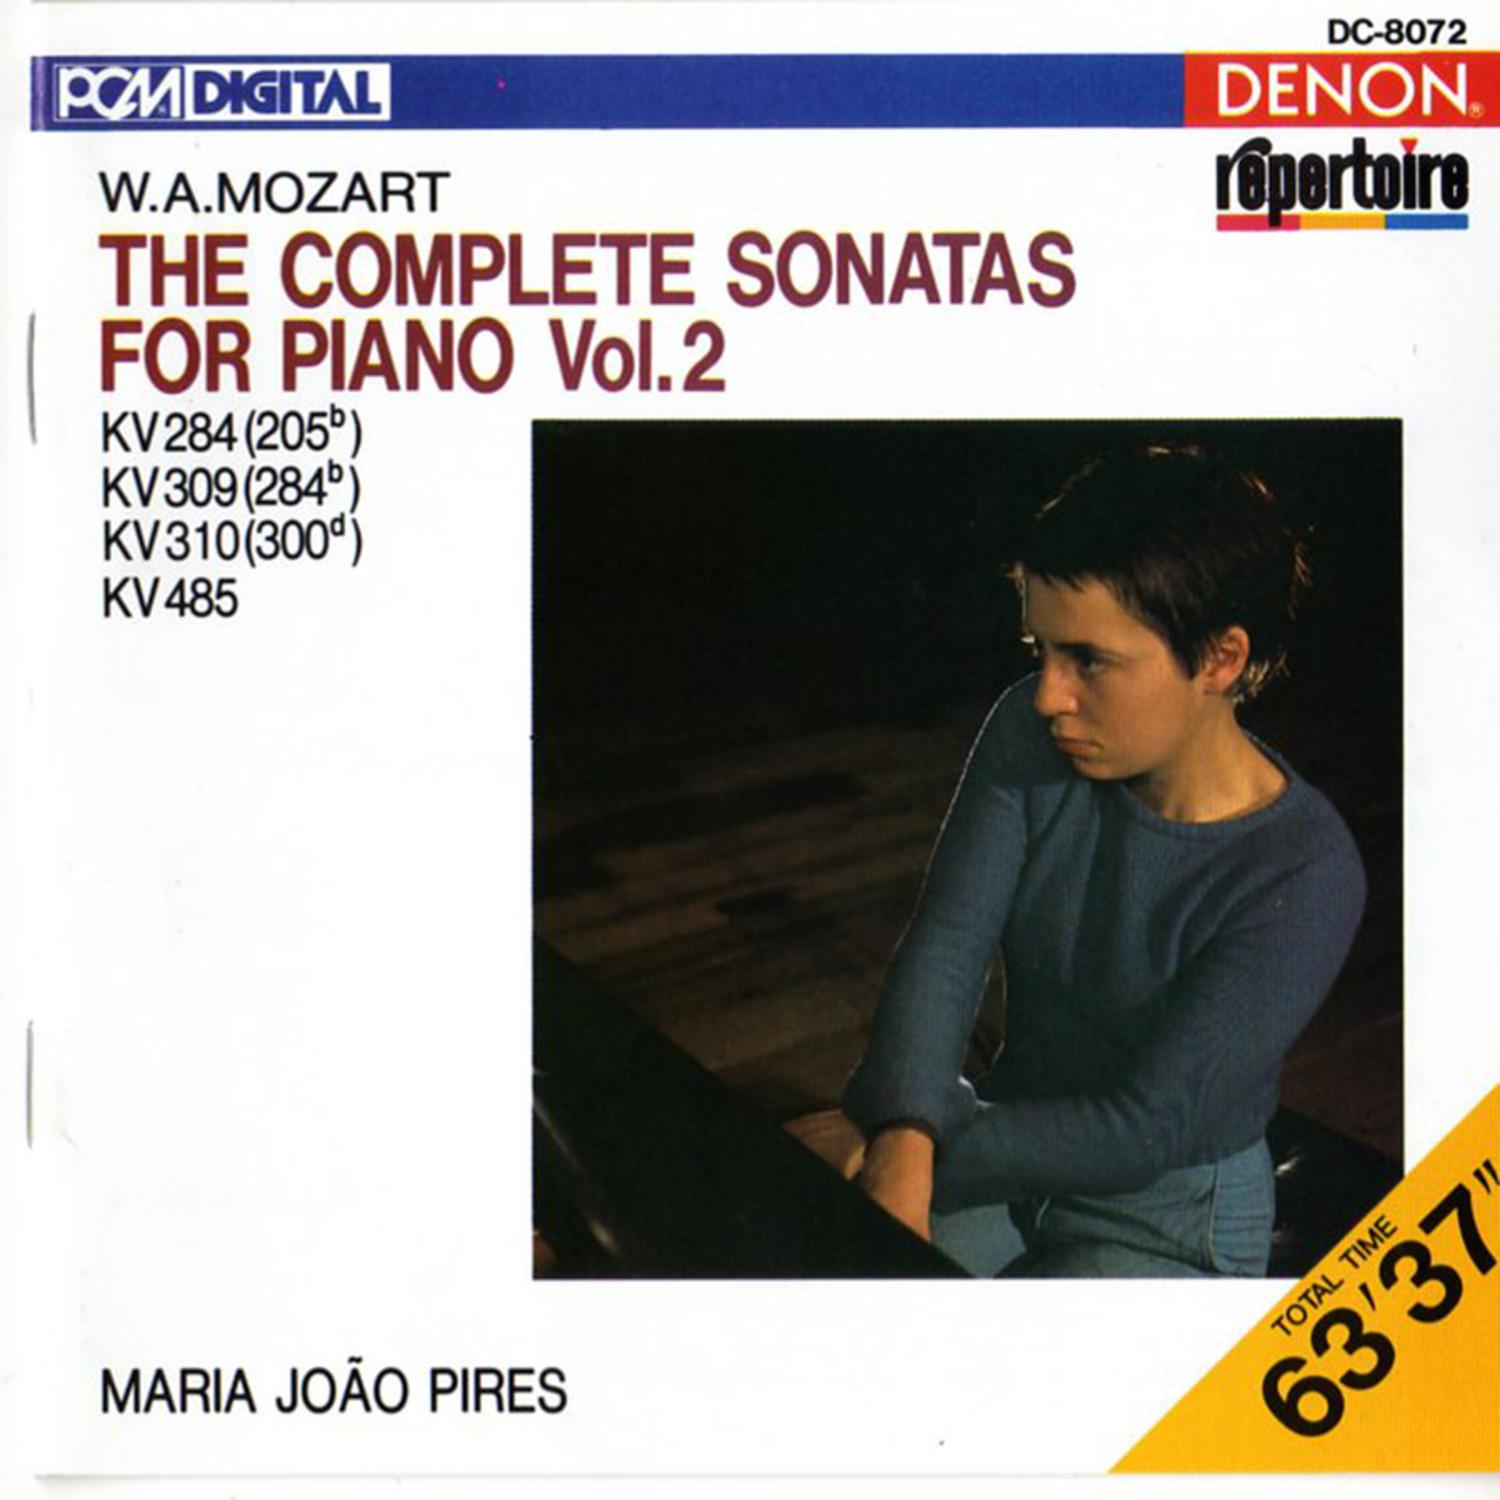 Piano Sonata No. 6 in D Major, K. 284: II. Rondeau en Polonaise: Andante